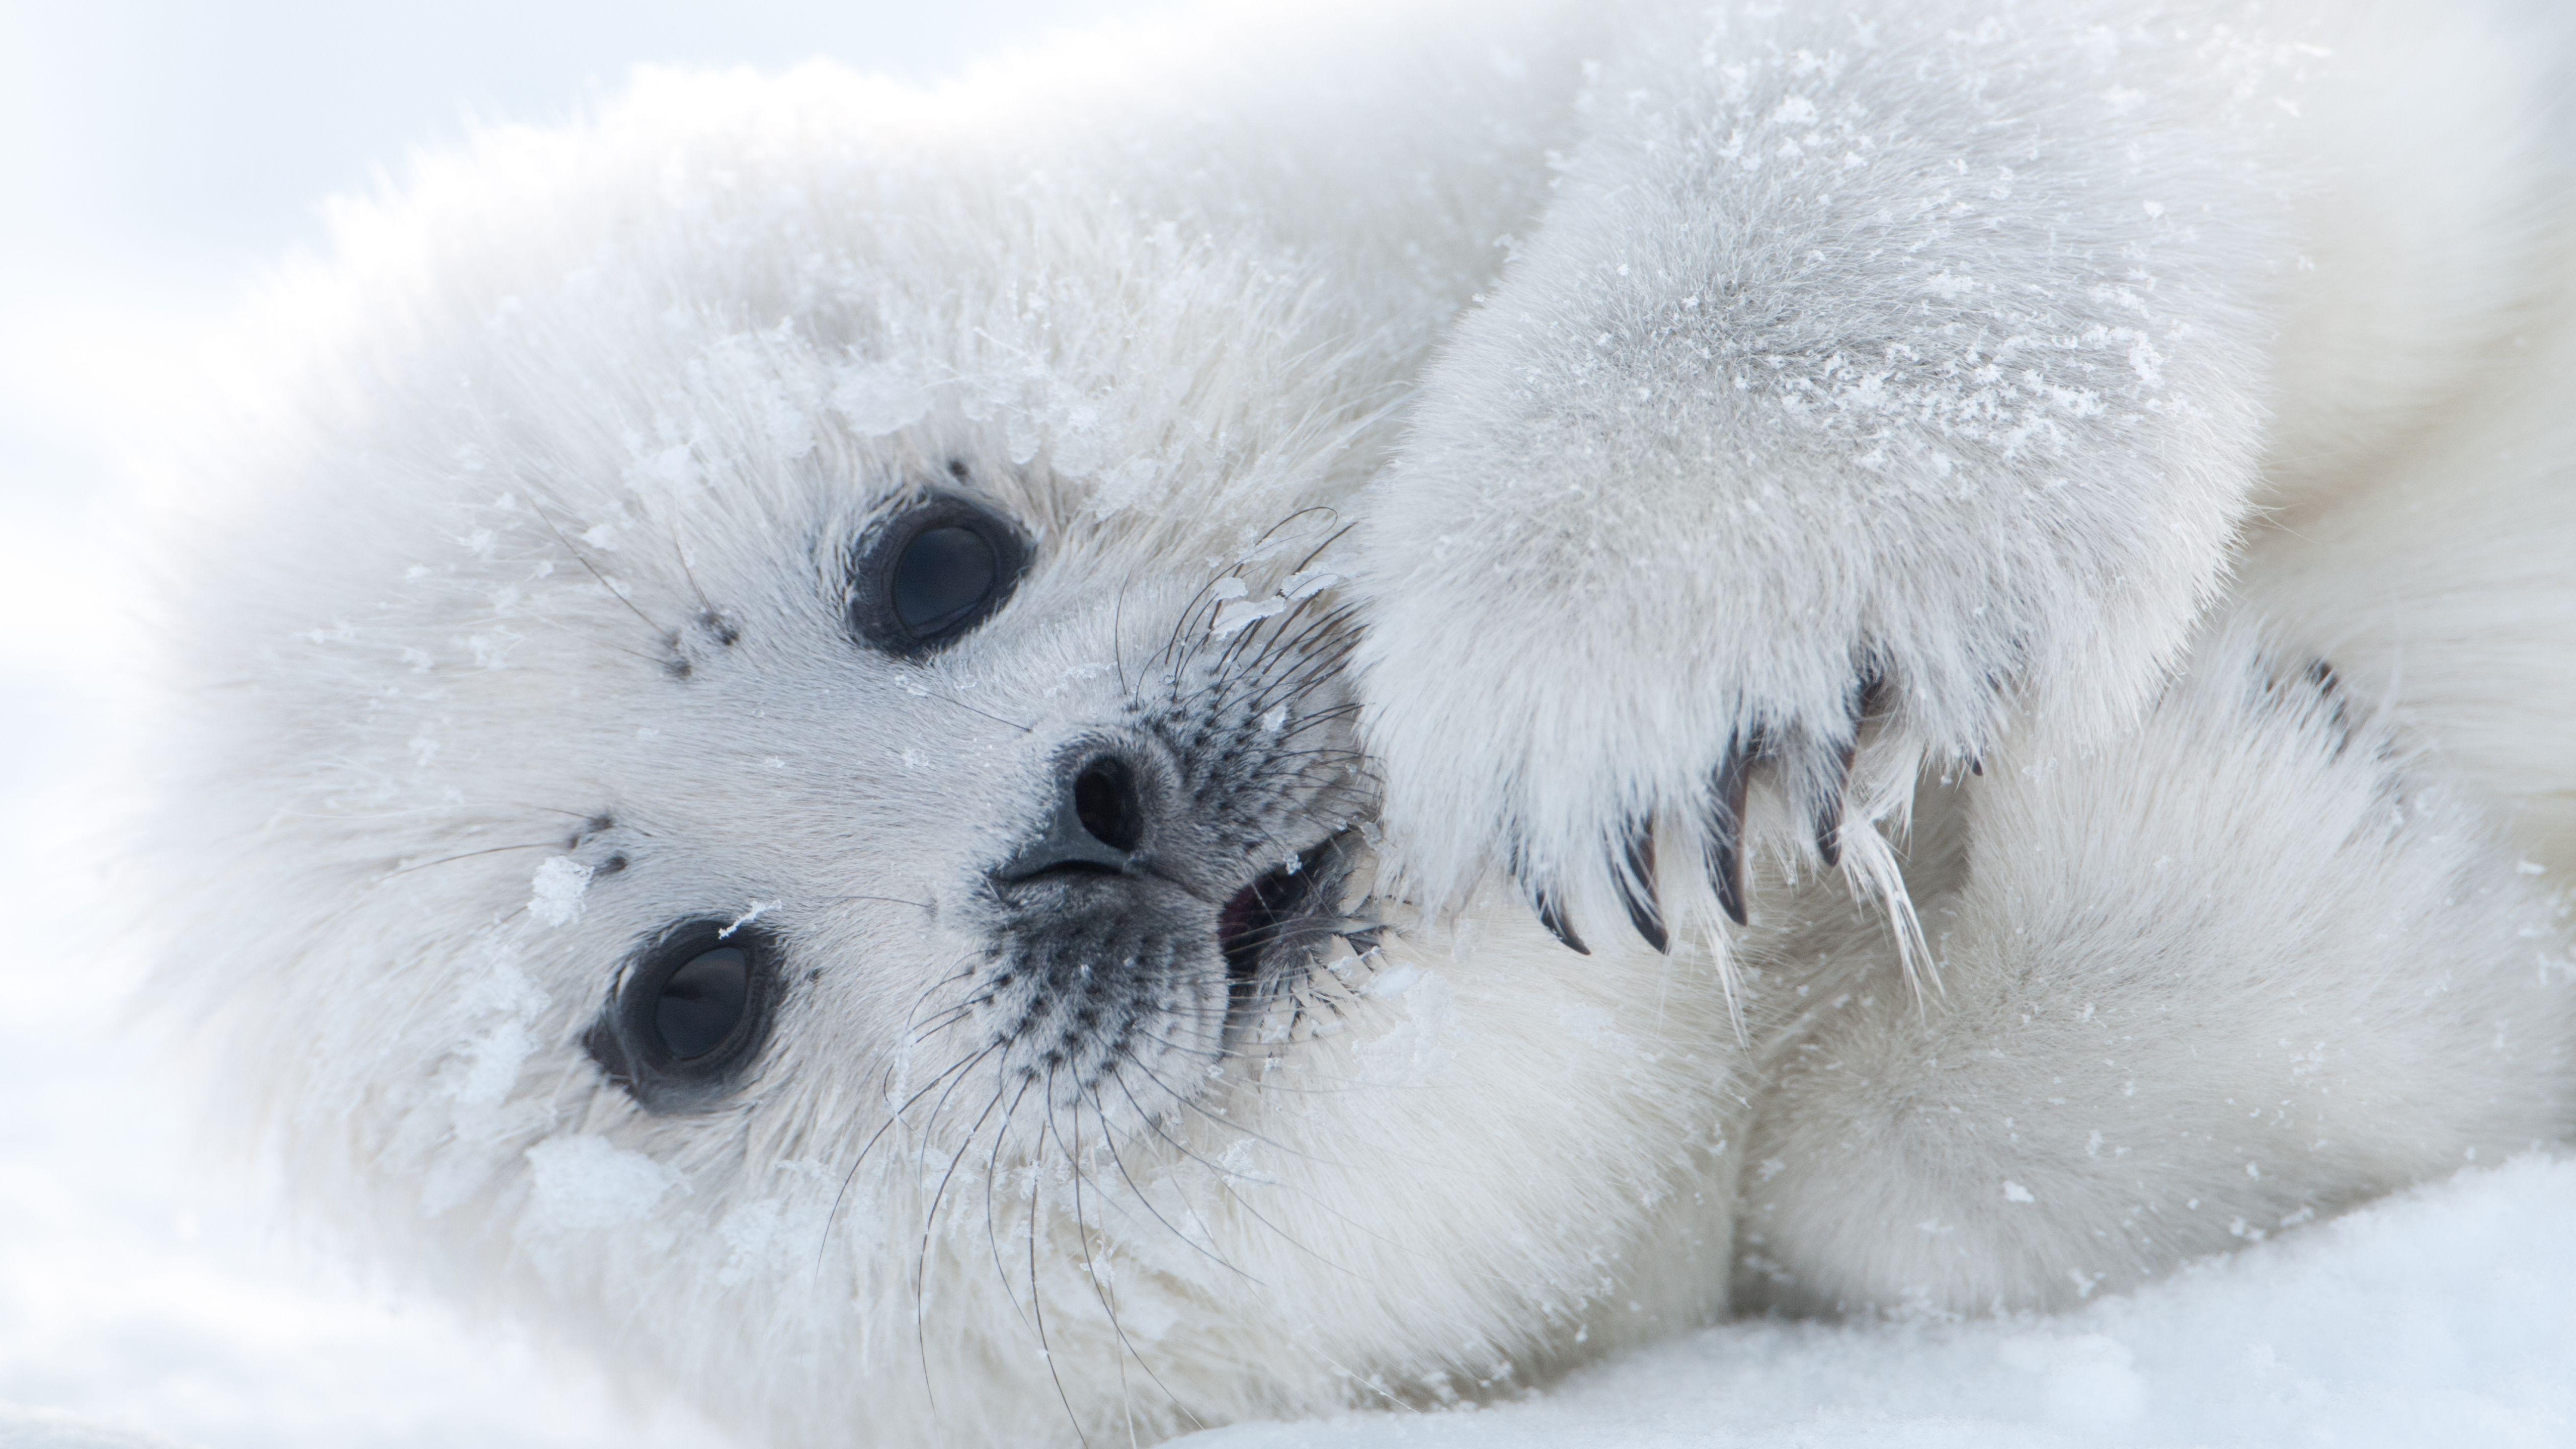 Ice animals. Байкальская НЕПРА Белек. Белек гренландского тюленя. Гренландский тюлень Нерпа. Белёк детеныш нерпы Байкальской.